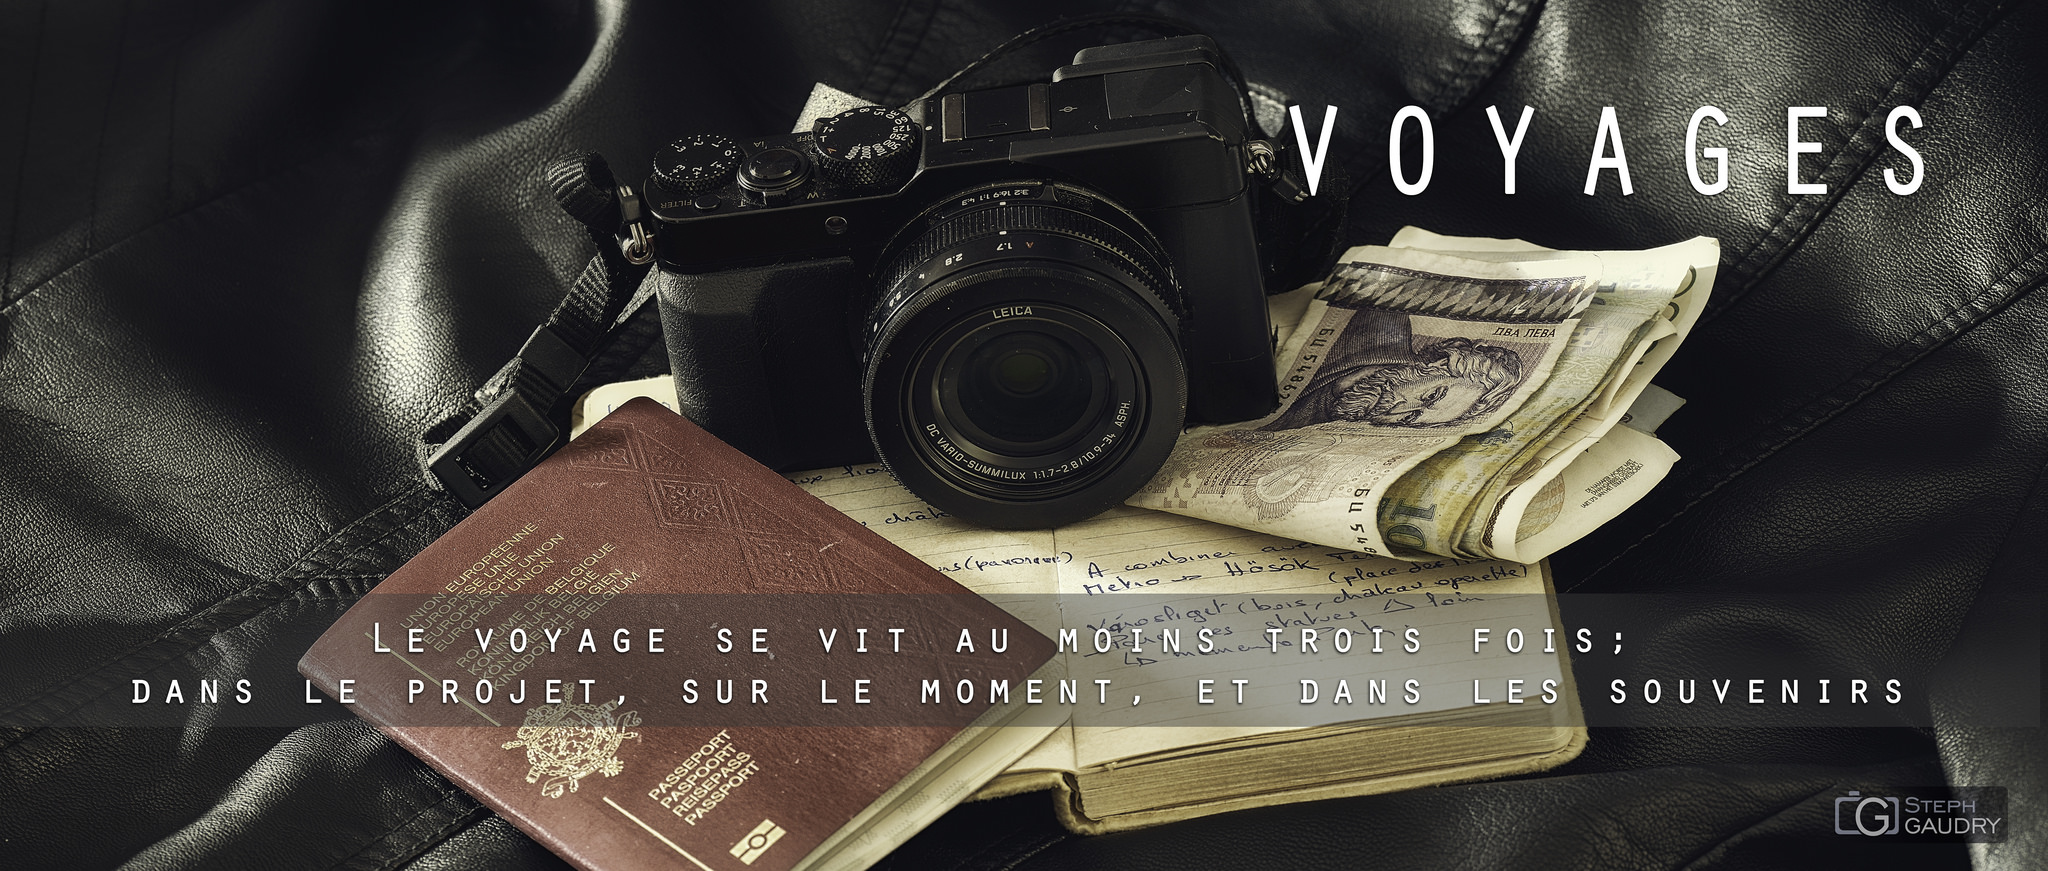 Voyages [Click to start slideshow]